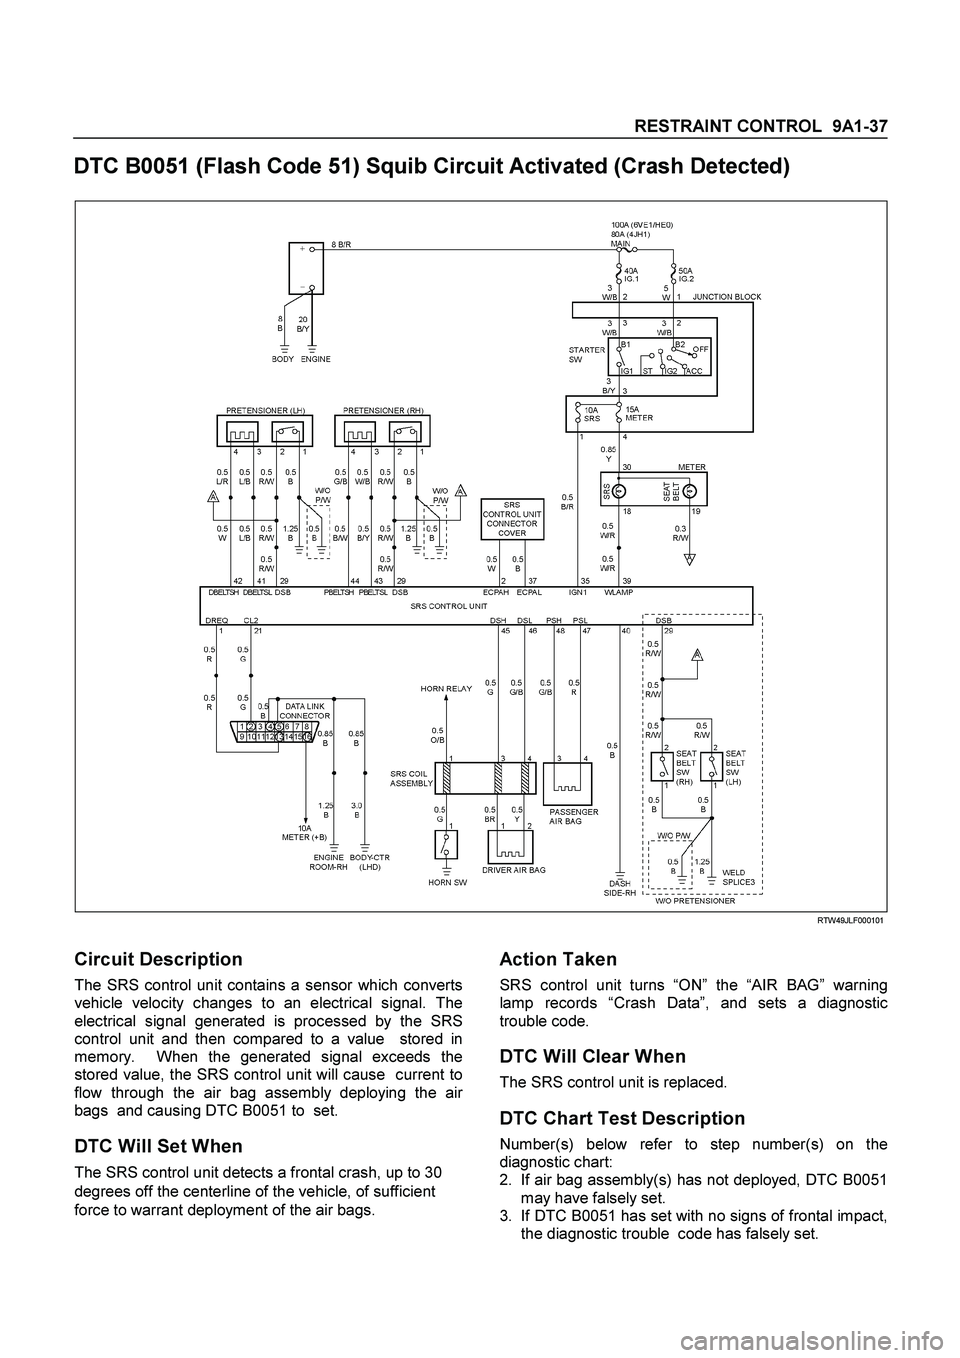 ISUZU TF SERIES 2004  Workshop Manual RESTRAINT CONTROL  9A1-37
 
DTC B0051 (Flash Code 51) Squib Circuit Activated (Crash Detected) 
 
  
  RTW49JLF000101 
 
Circuit Description 
The SRS control unit contains a sensor which converts
vehi